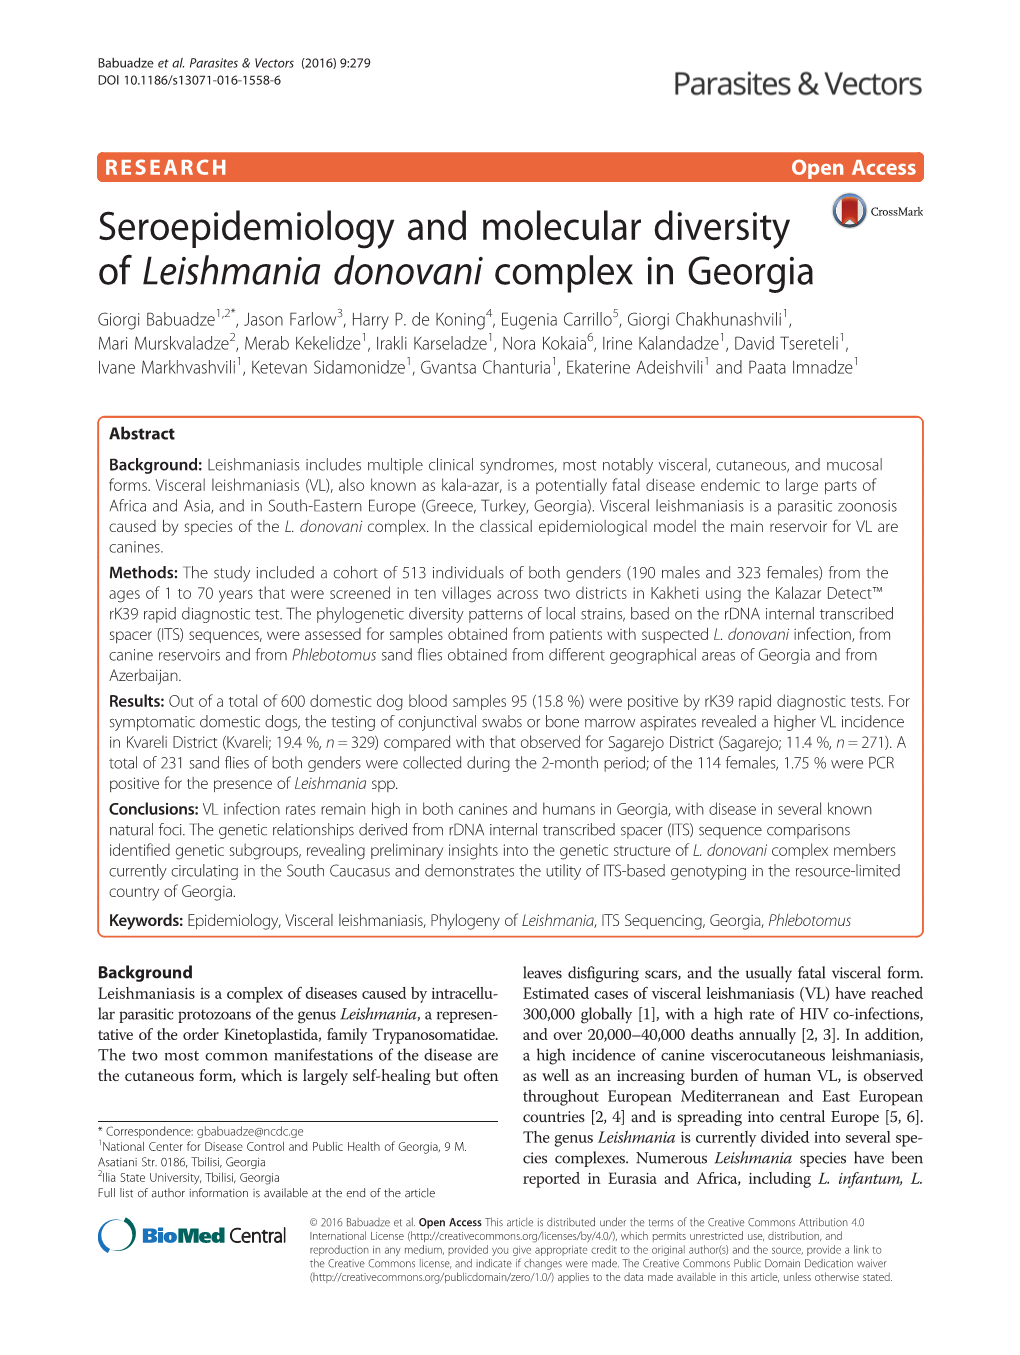 Seroepidemiology and Molecular Diversity of Leishmania Donovani Complex in Georgia Giorgi Babuadze1,2*, Jason Farlow3, Harry P